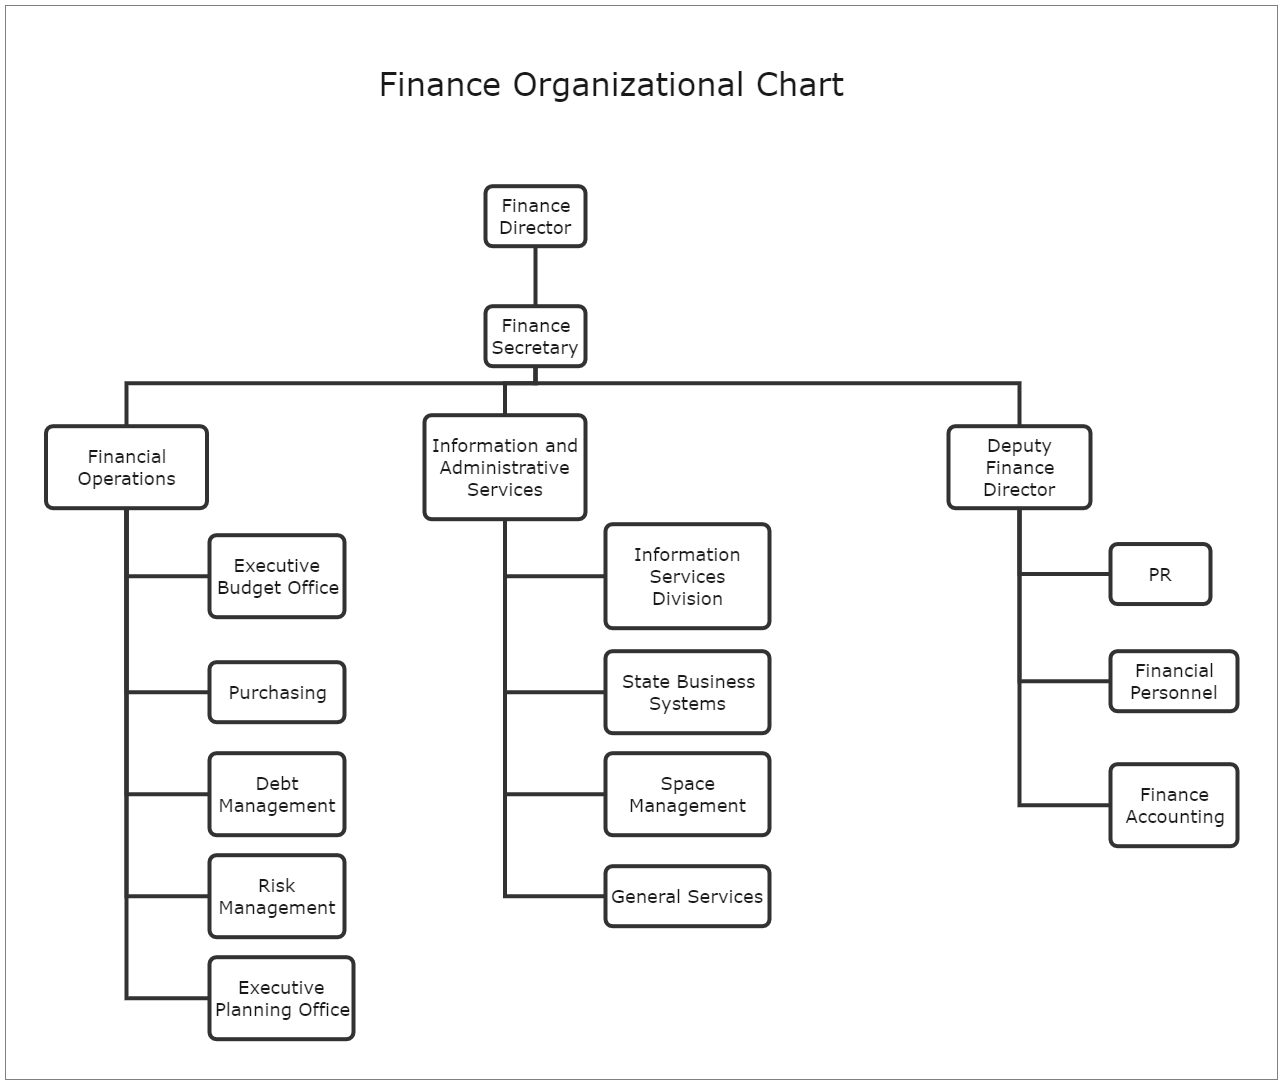 Finance Organizational Chart Template